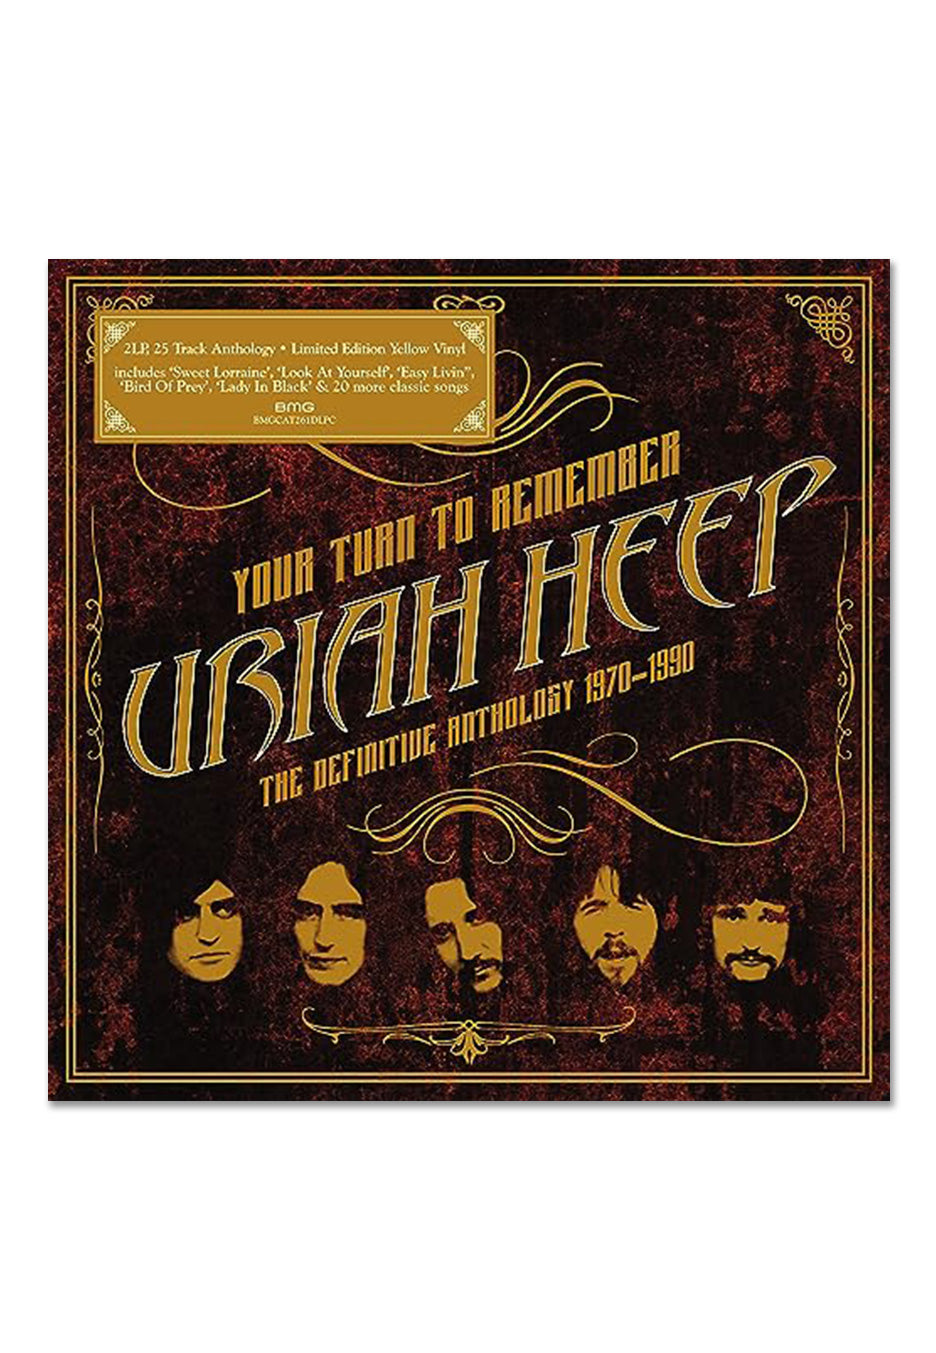 Uriah Heep - The Definitive Anthology 1970-1990 Ltd. Yellow - Colored 2 Vinyl